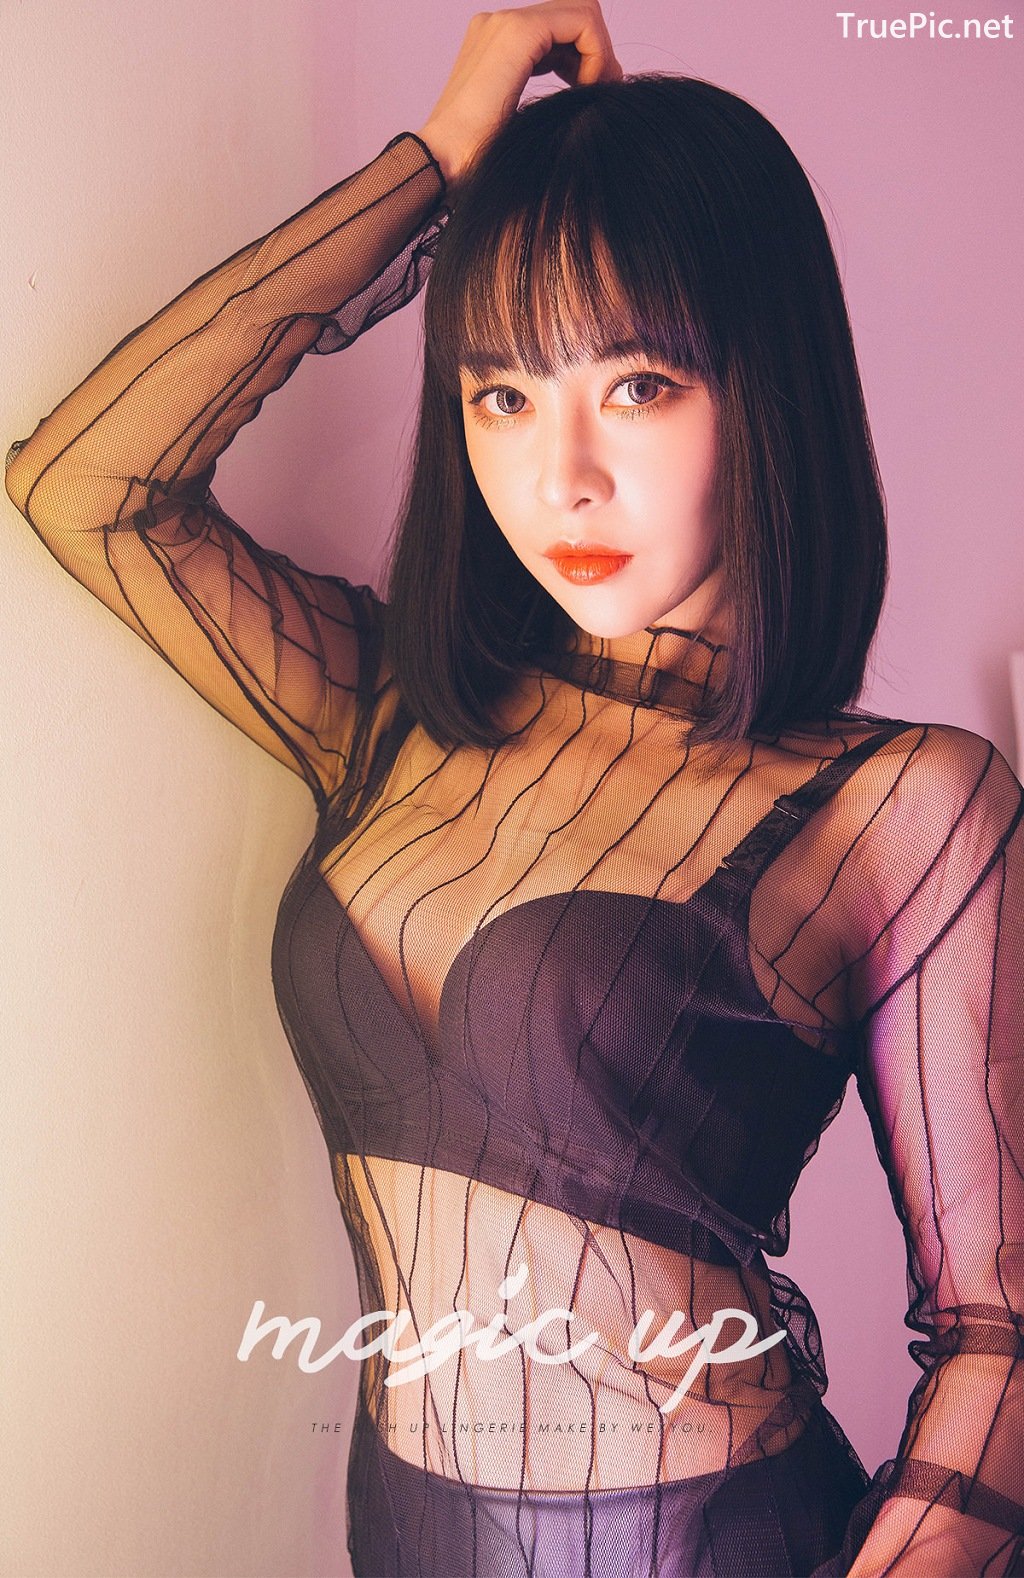 Image-Korean-Fashion-Model-Ryu-Hyeonju-We-x-You-Lingerie-Set-TruePic.net- Picture-23